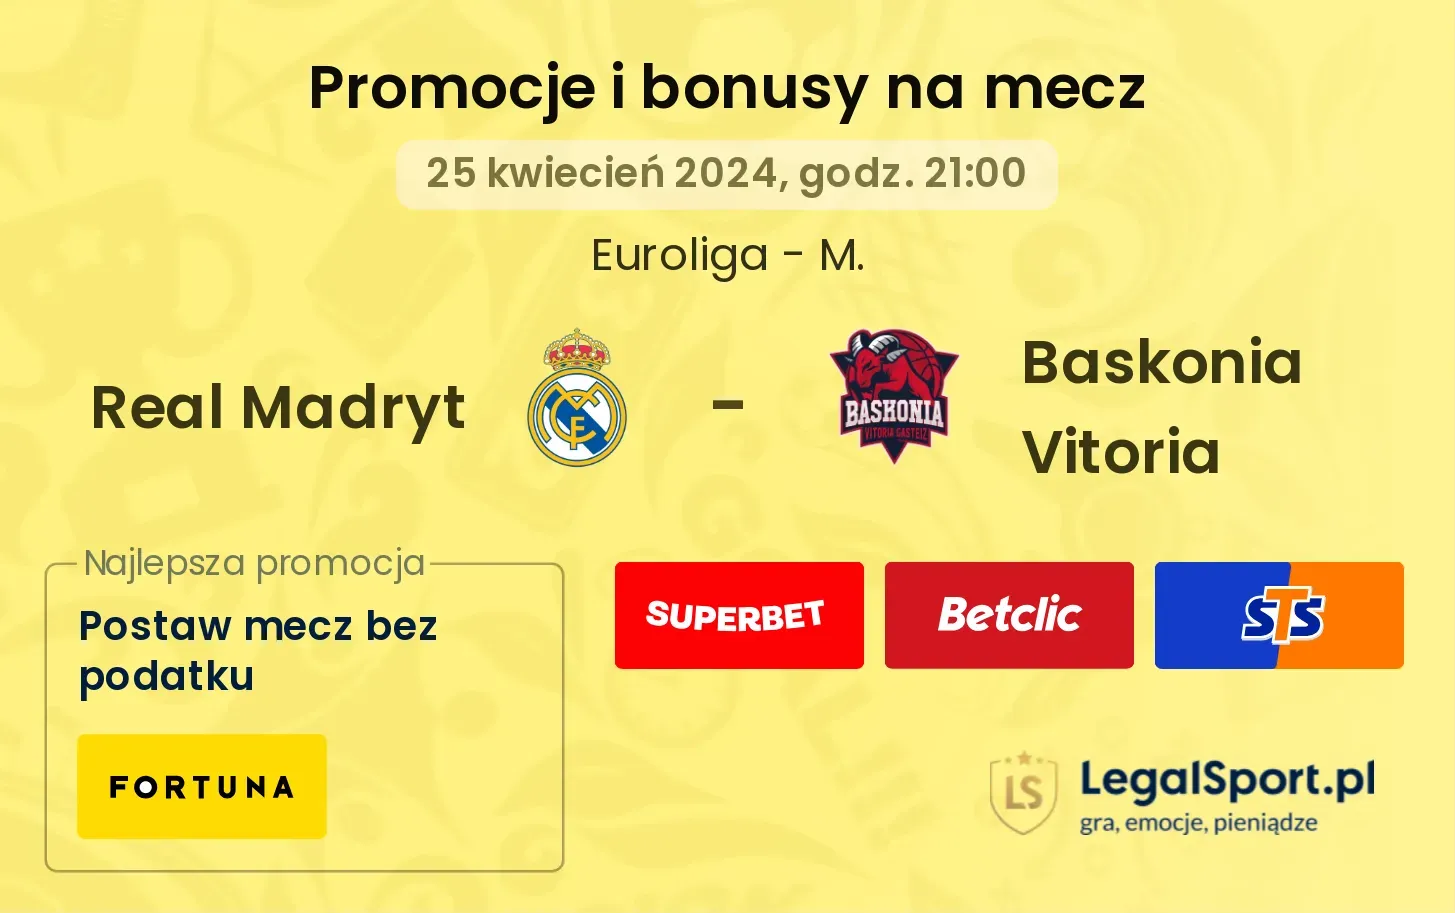 Real Madryt - Baskonia Vitoria promocje bonusy na mecz